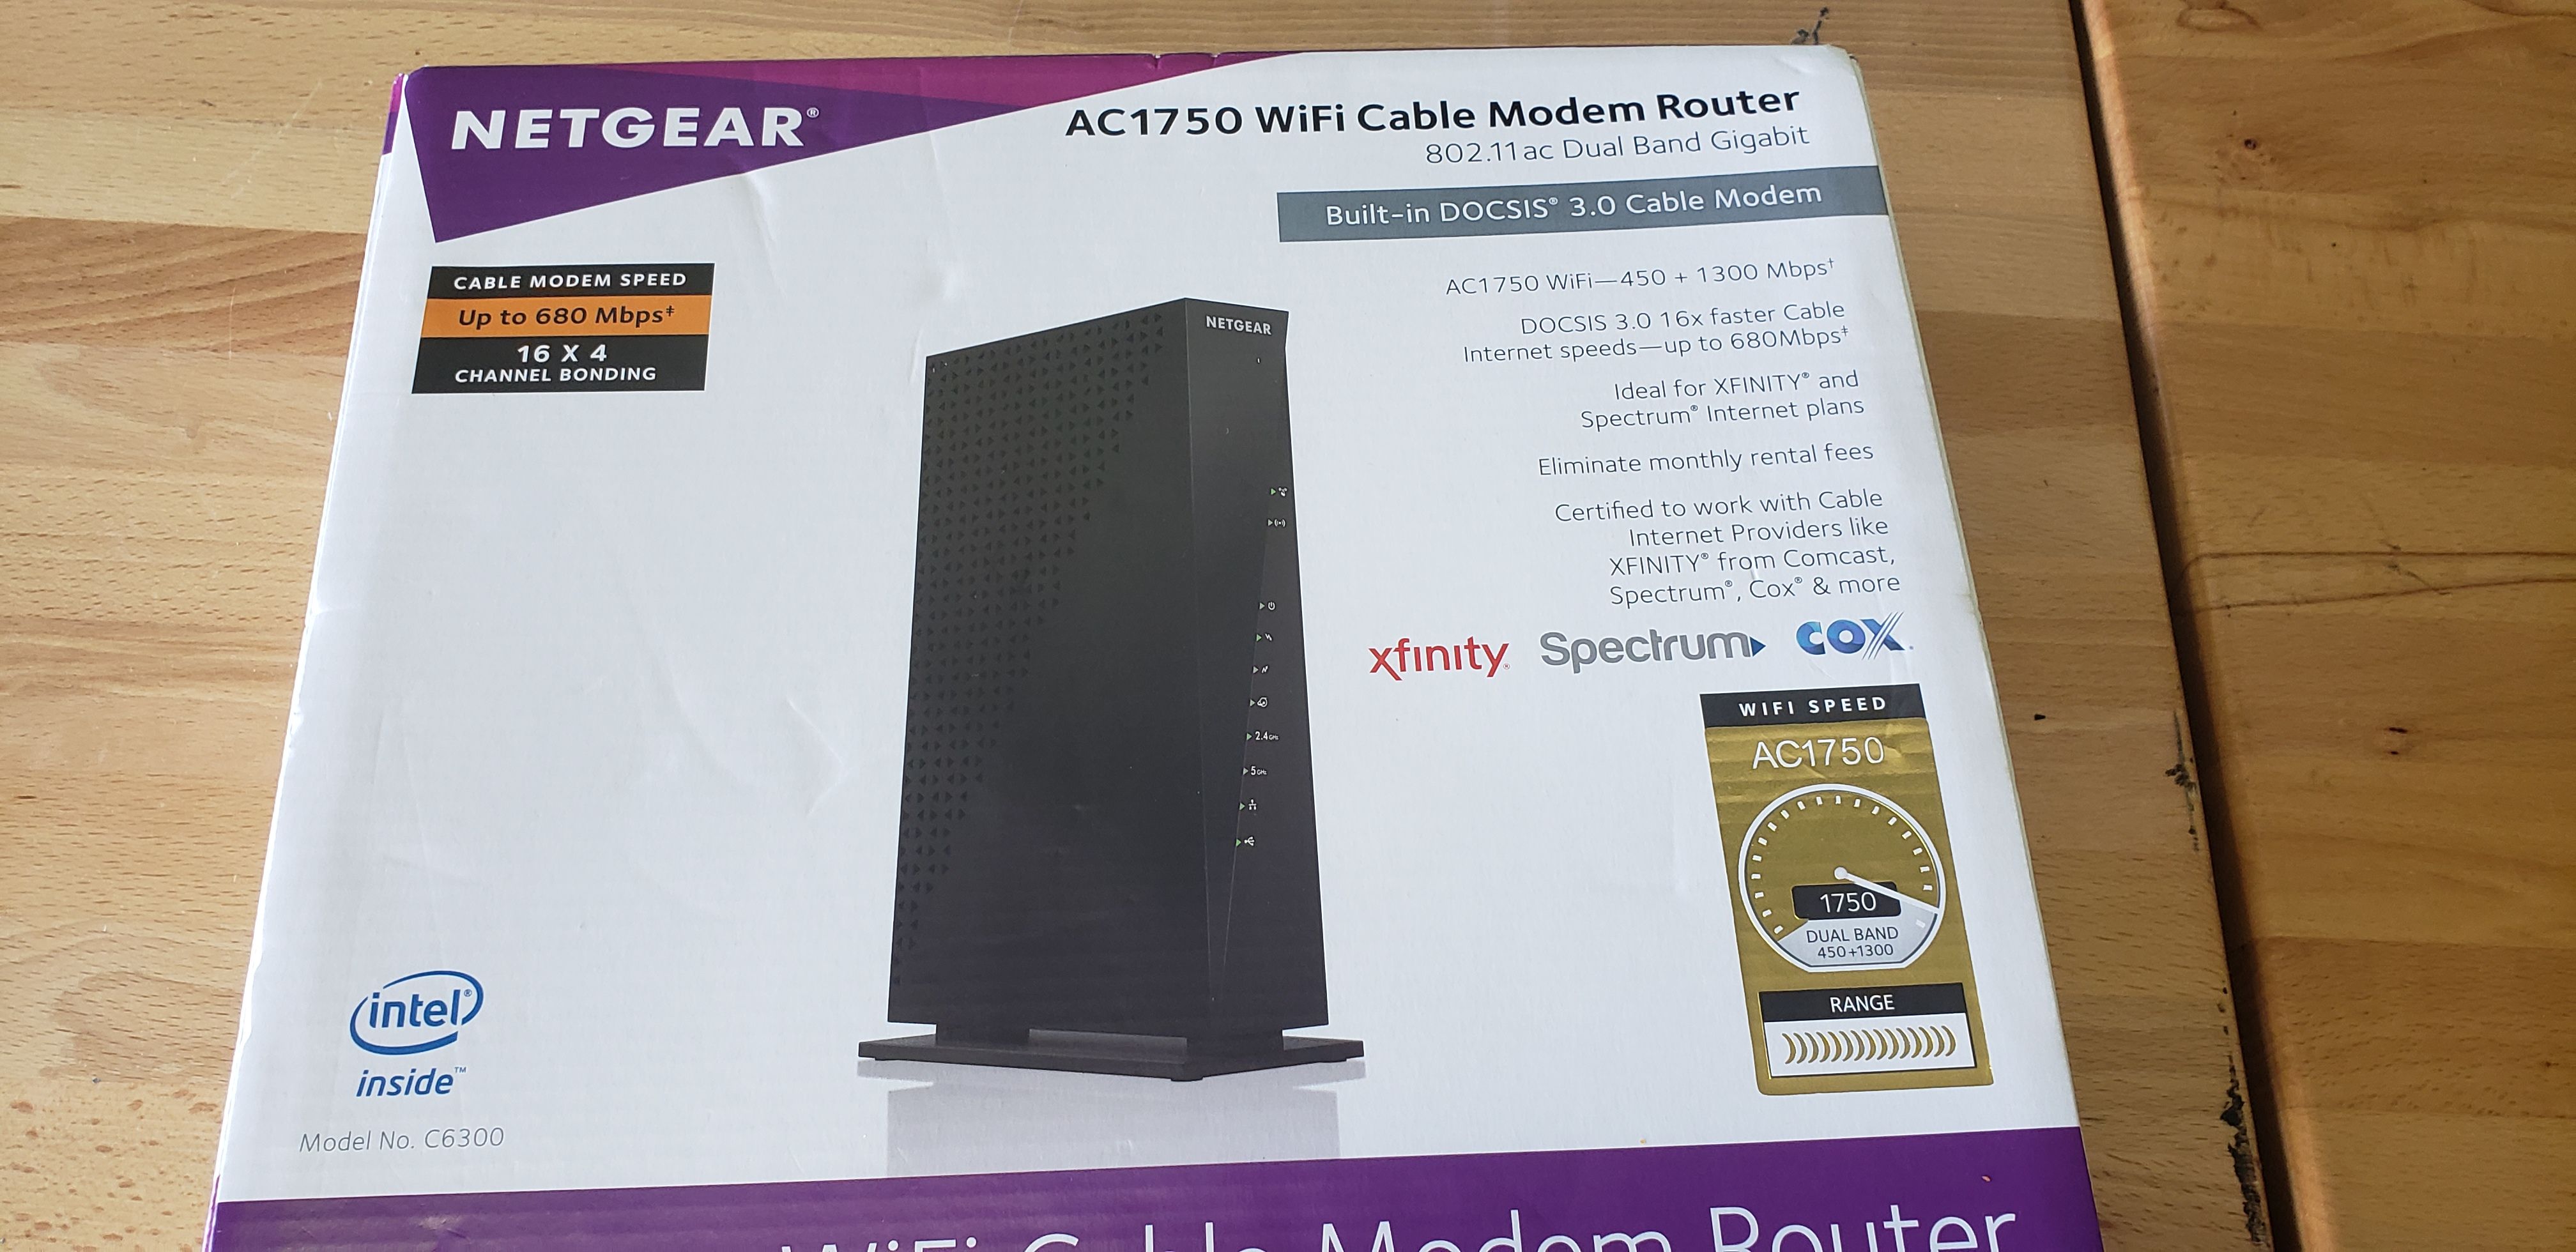 NEW! Netgear C6300 AC1750 WiFi Cable Modem Router